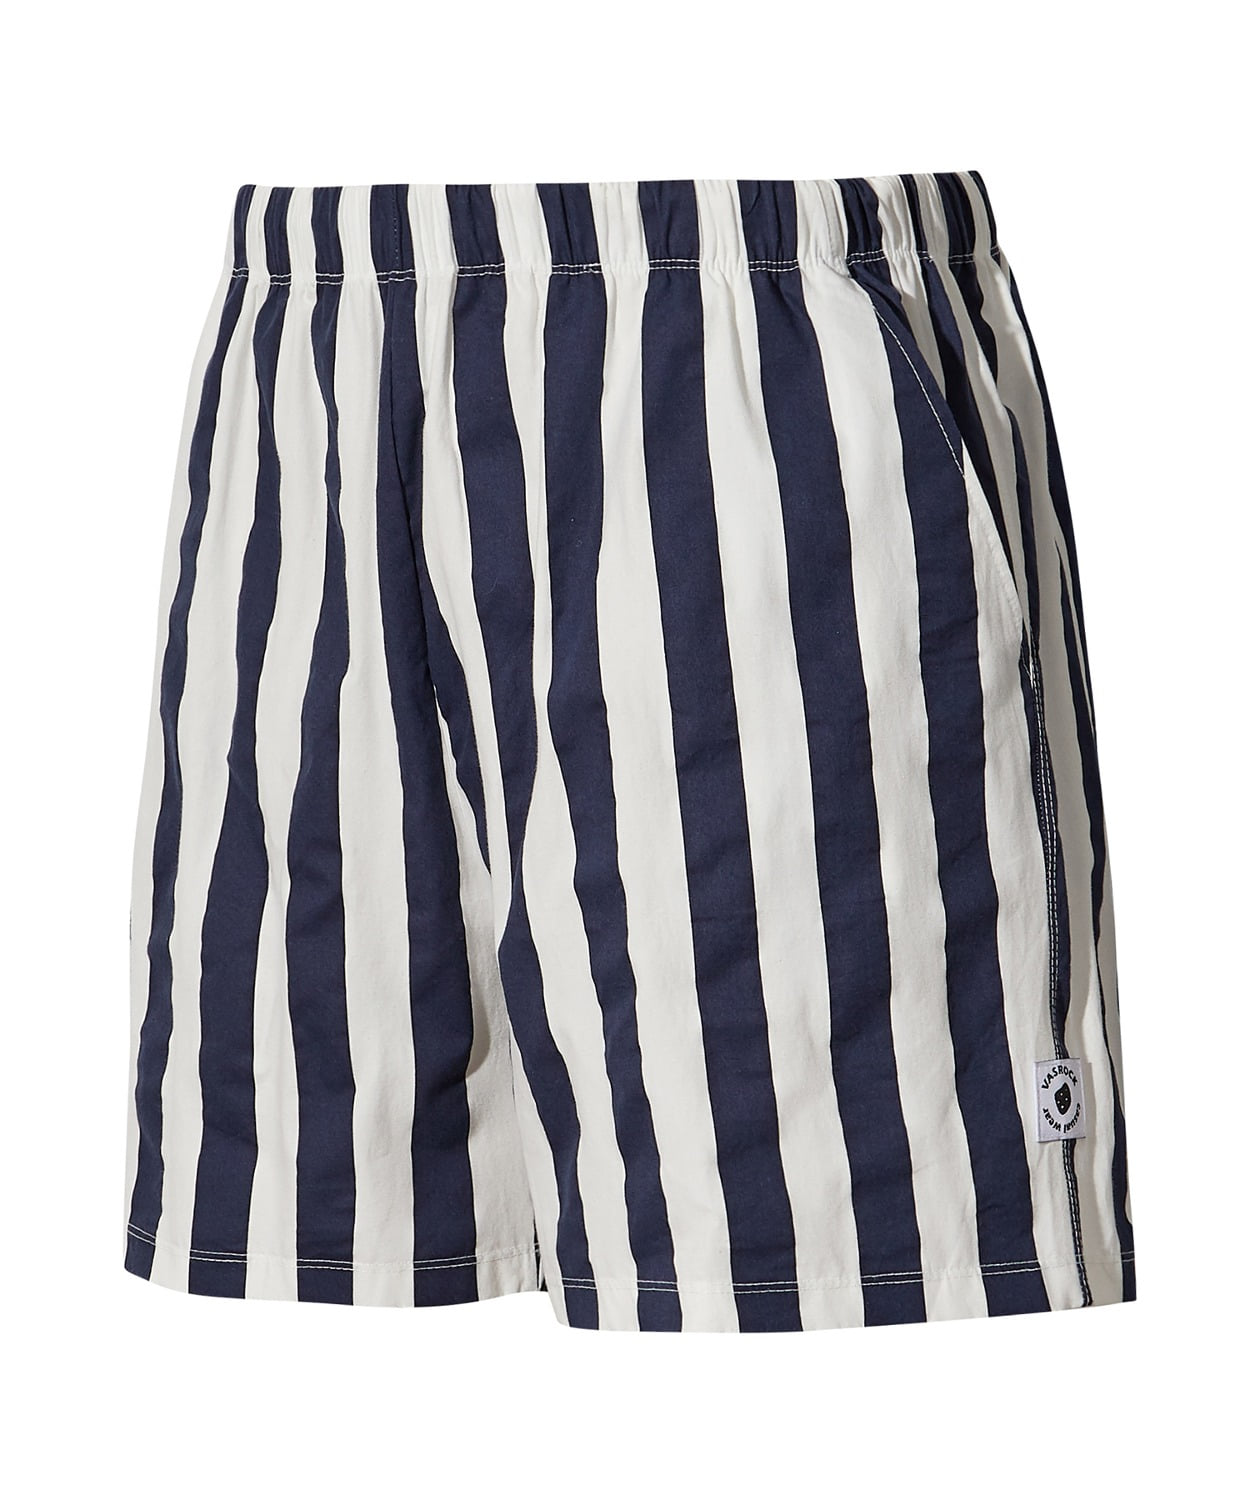 VASROCK,Stripe Cotton Shorts Navy